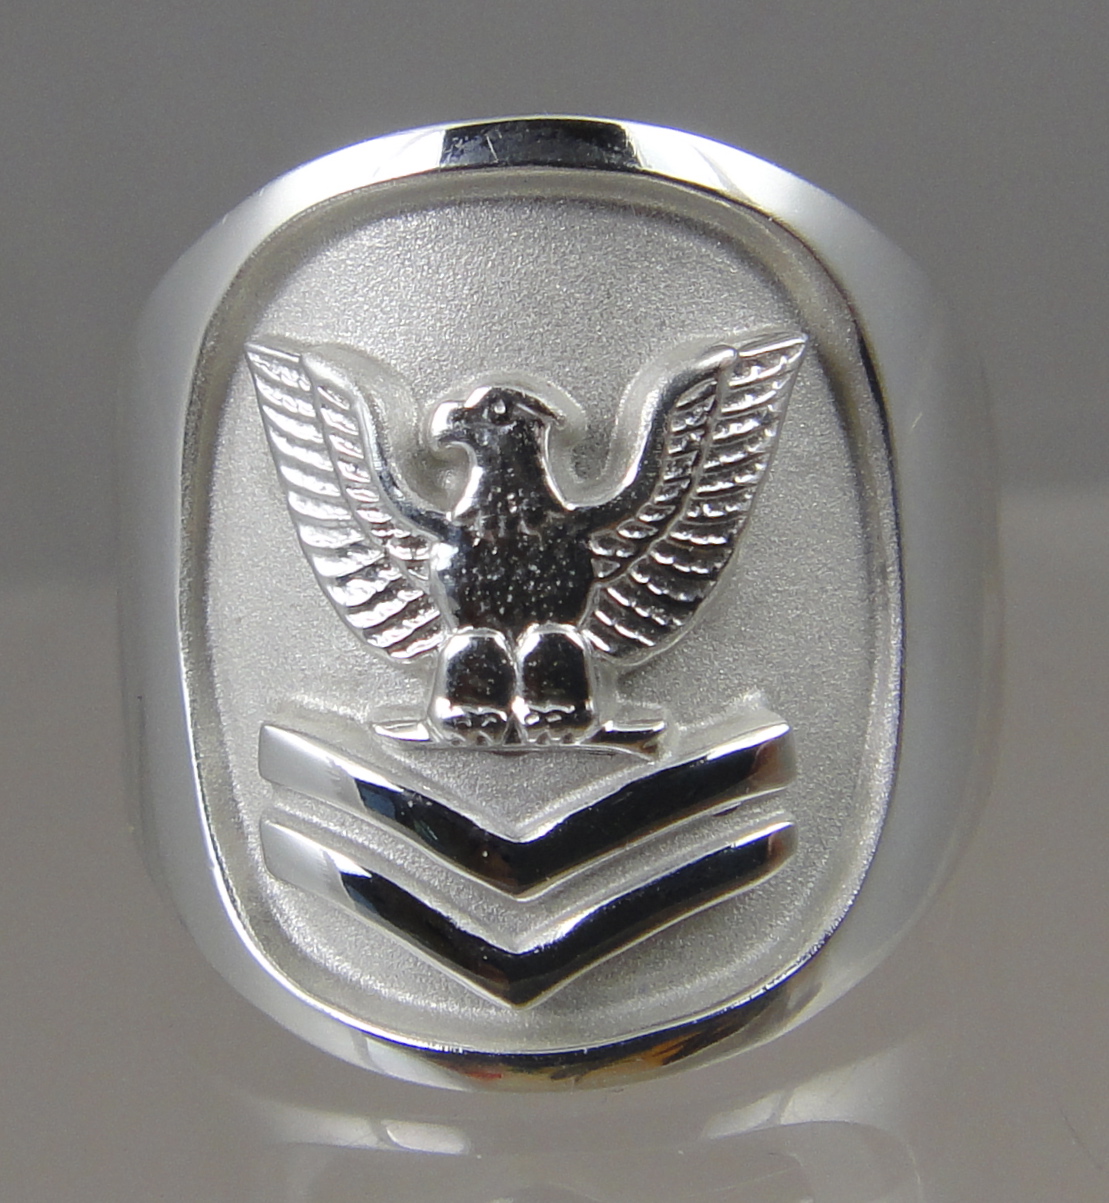 USNI Sterling Silver Insignia Key Ring at M.LaHart & Co.